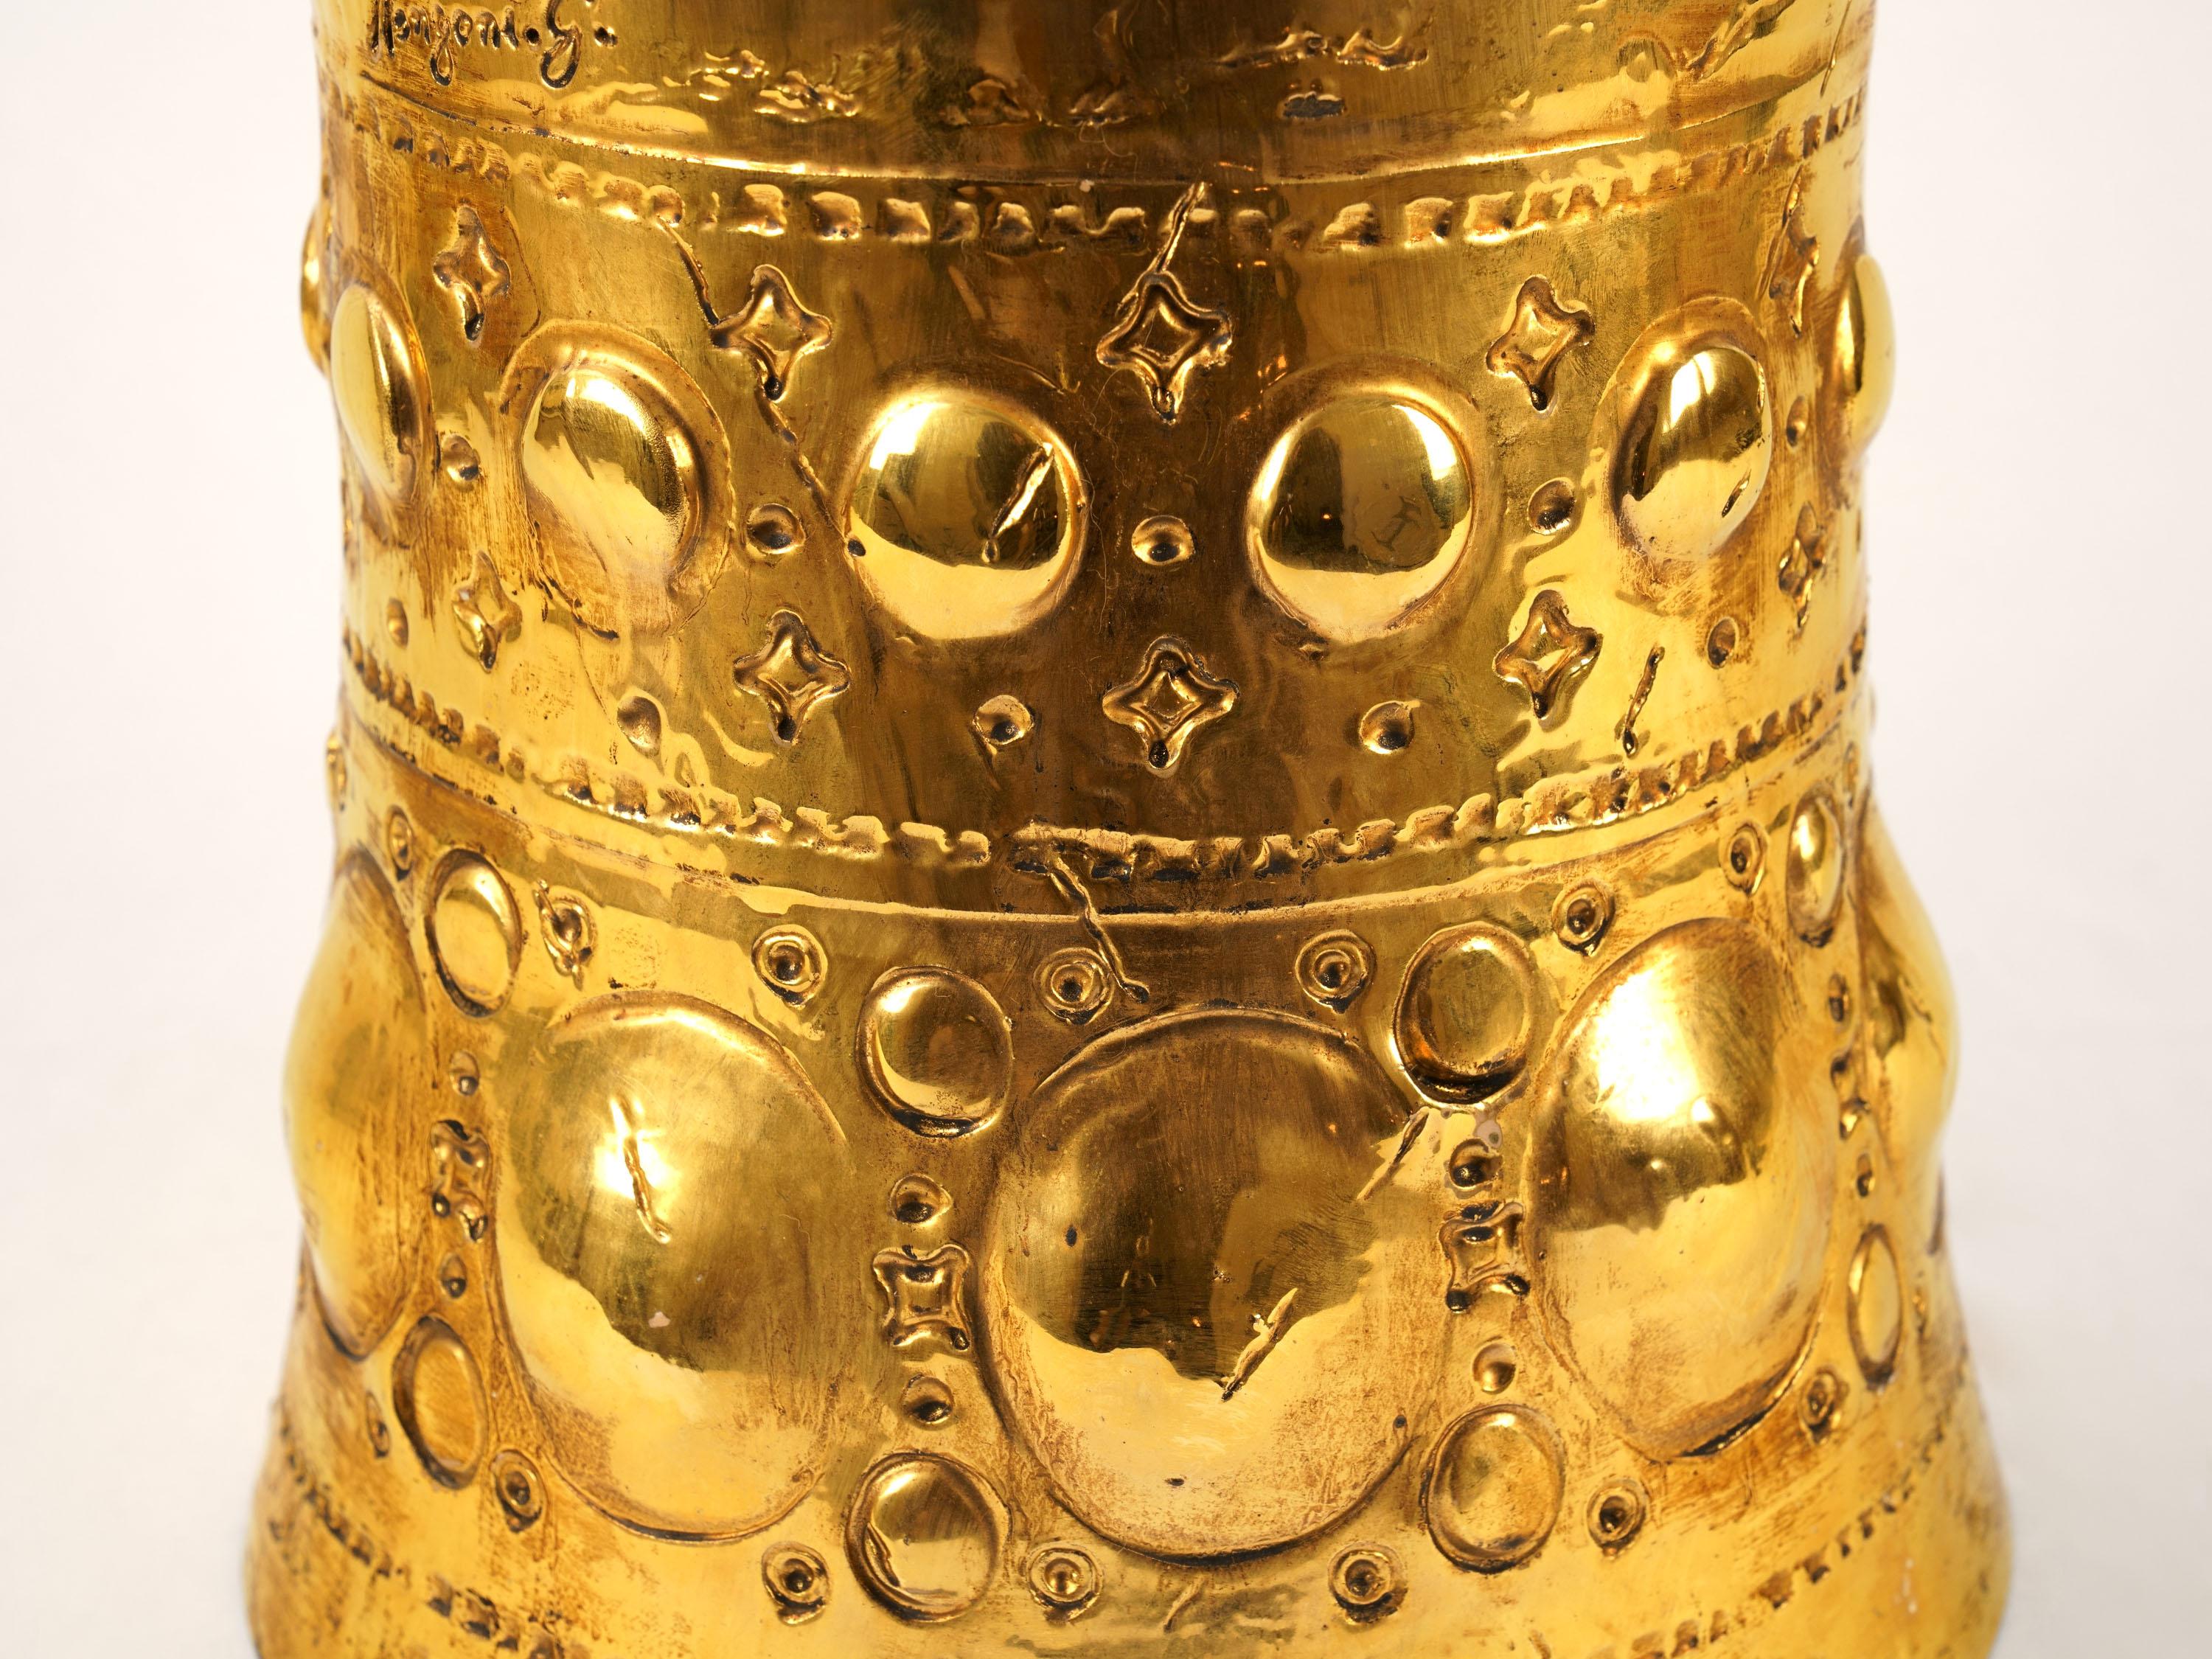 Contemporary Sculpture Ceramic Vase 24 Karat Gold Luster Vessel Decoration Handmade, Italy For Sale